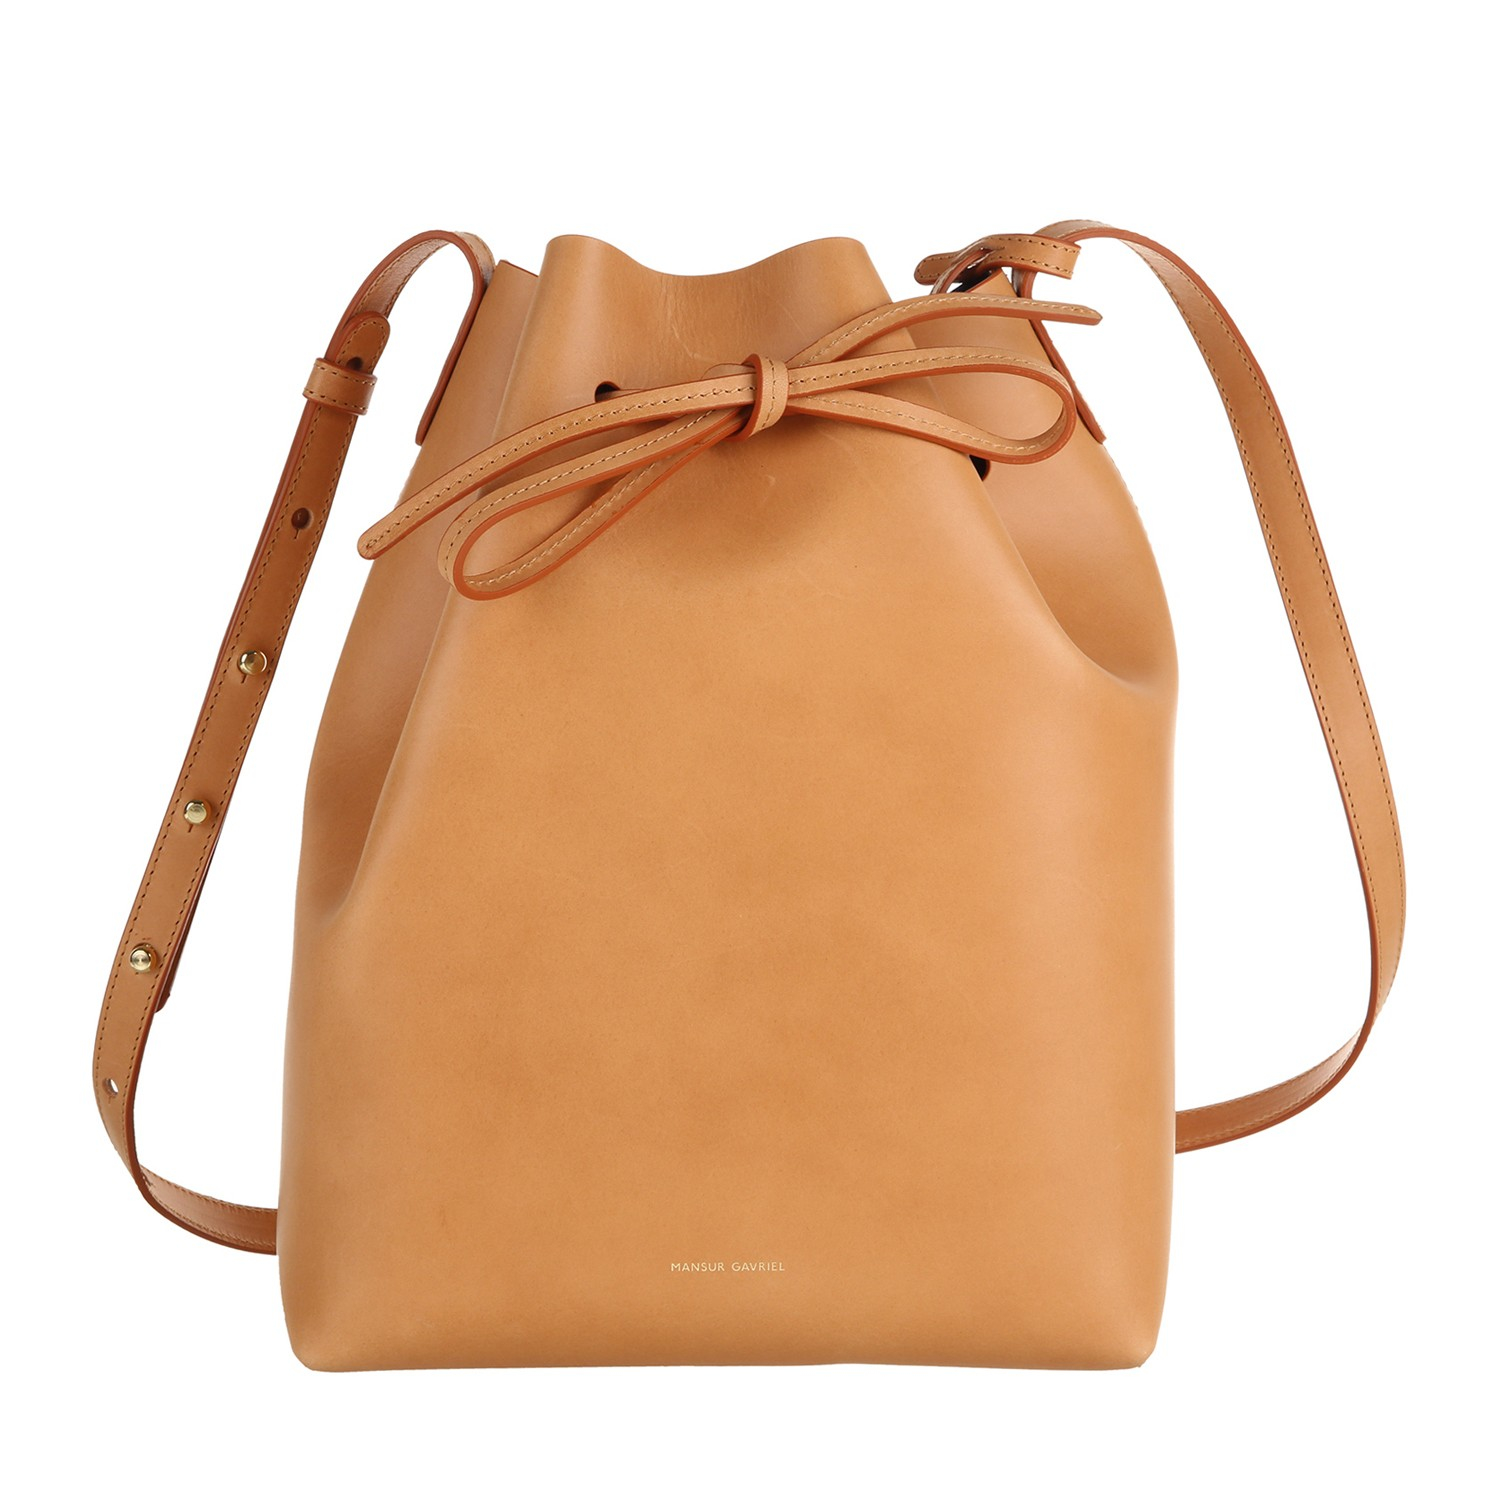 Mansur gavriel Bucket Bag in Orange | Lyst